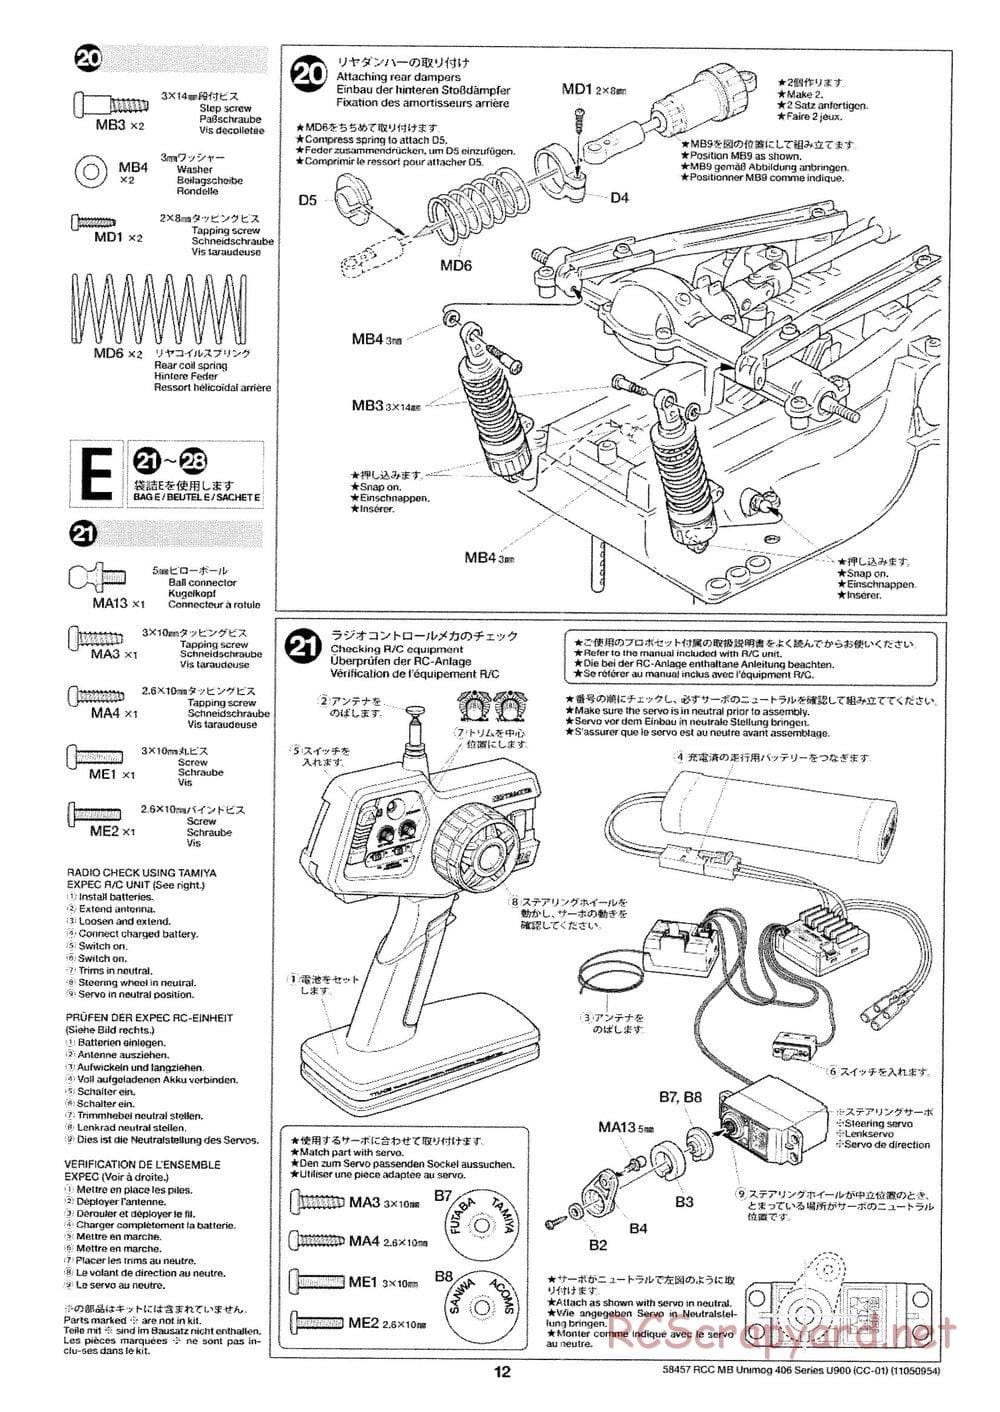 Tamiya - Mercedes-Benz Unimog 406 Series U900 - CC-01 Chassis - Manual - Page 12